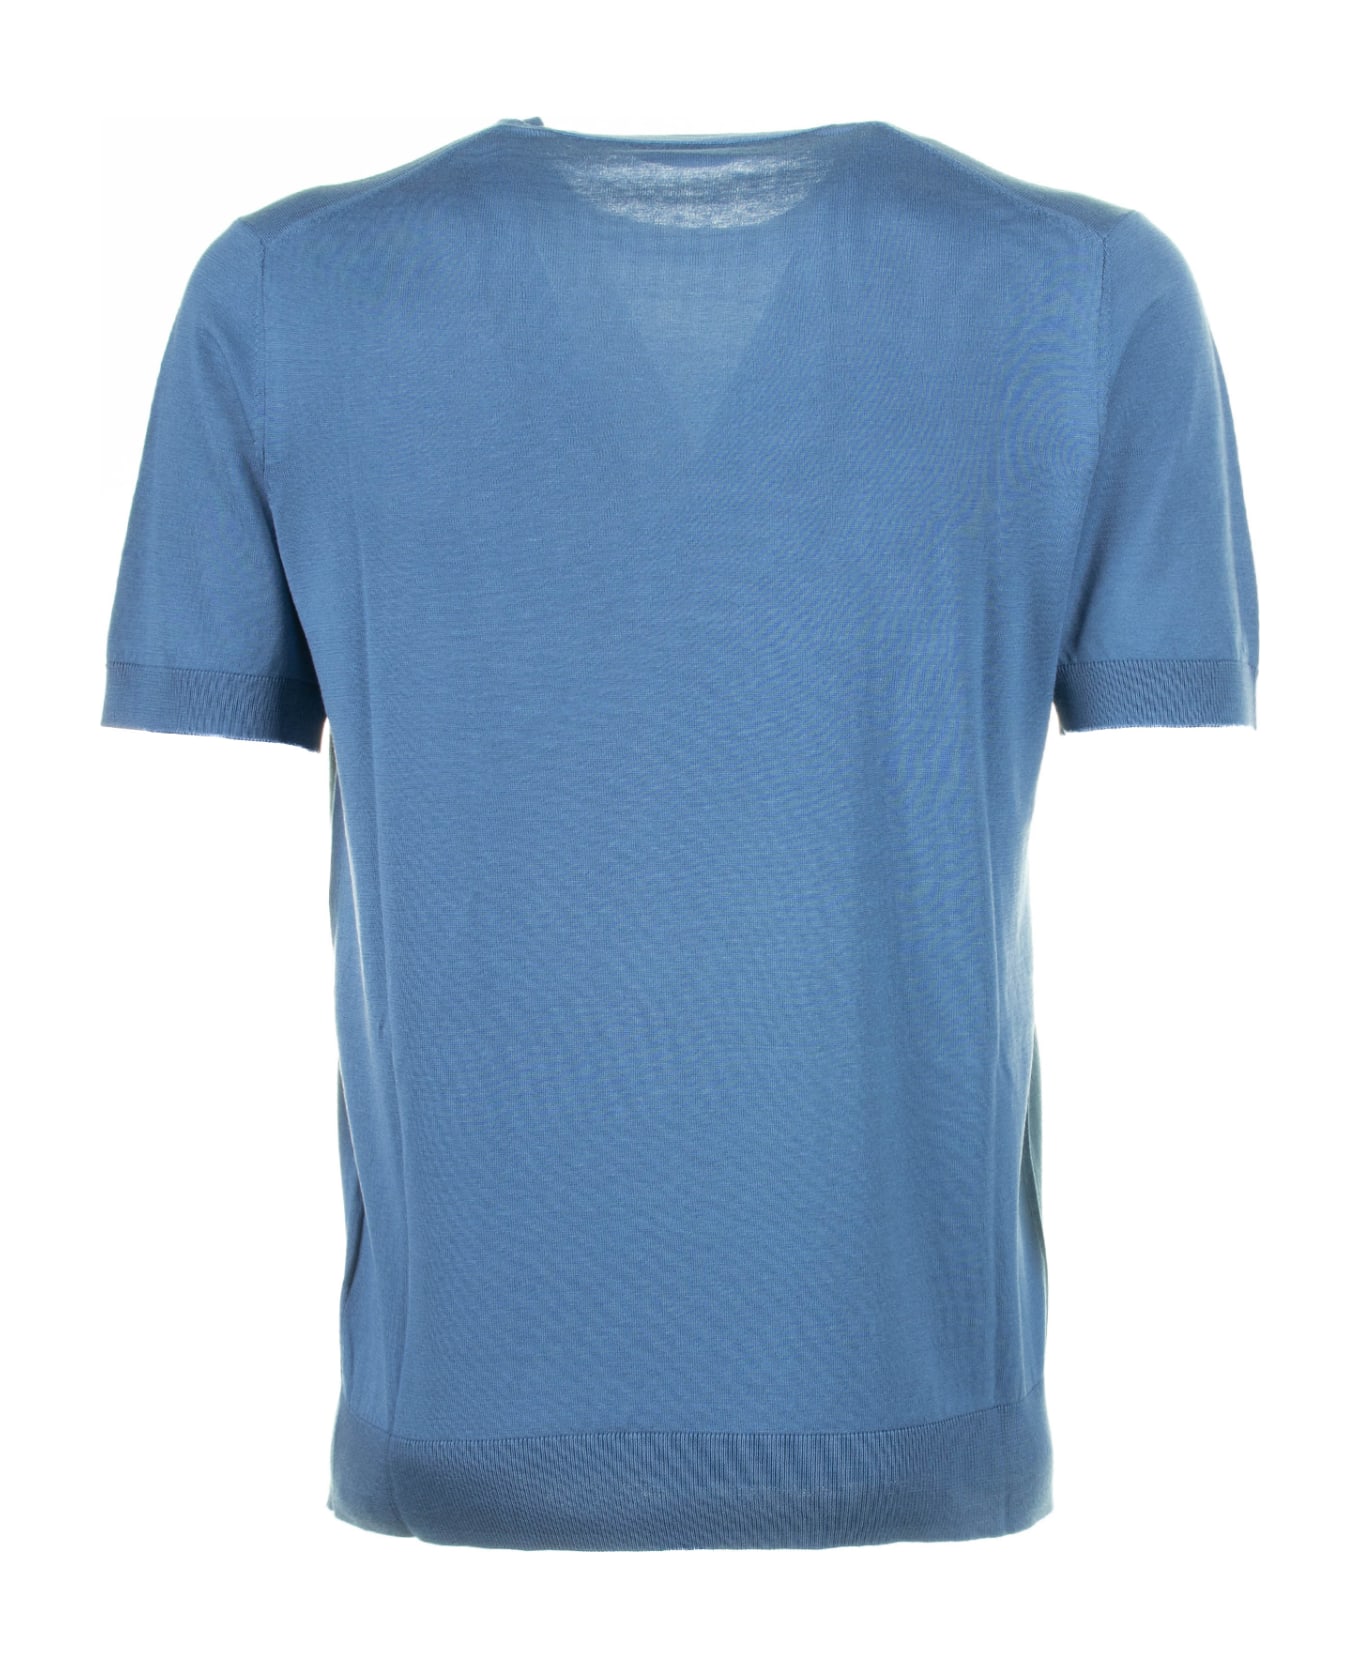 Paolo Pecora Light Blue Cotton And Silk T-shirt - AZZURRO